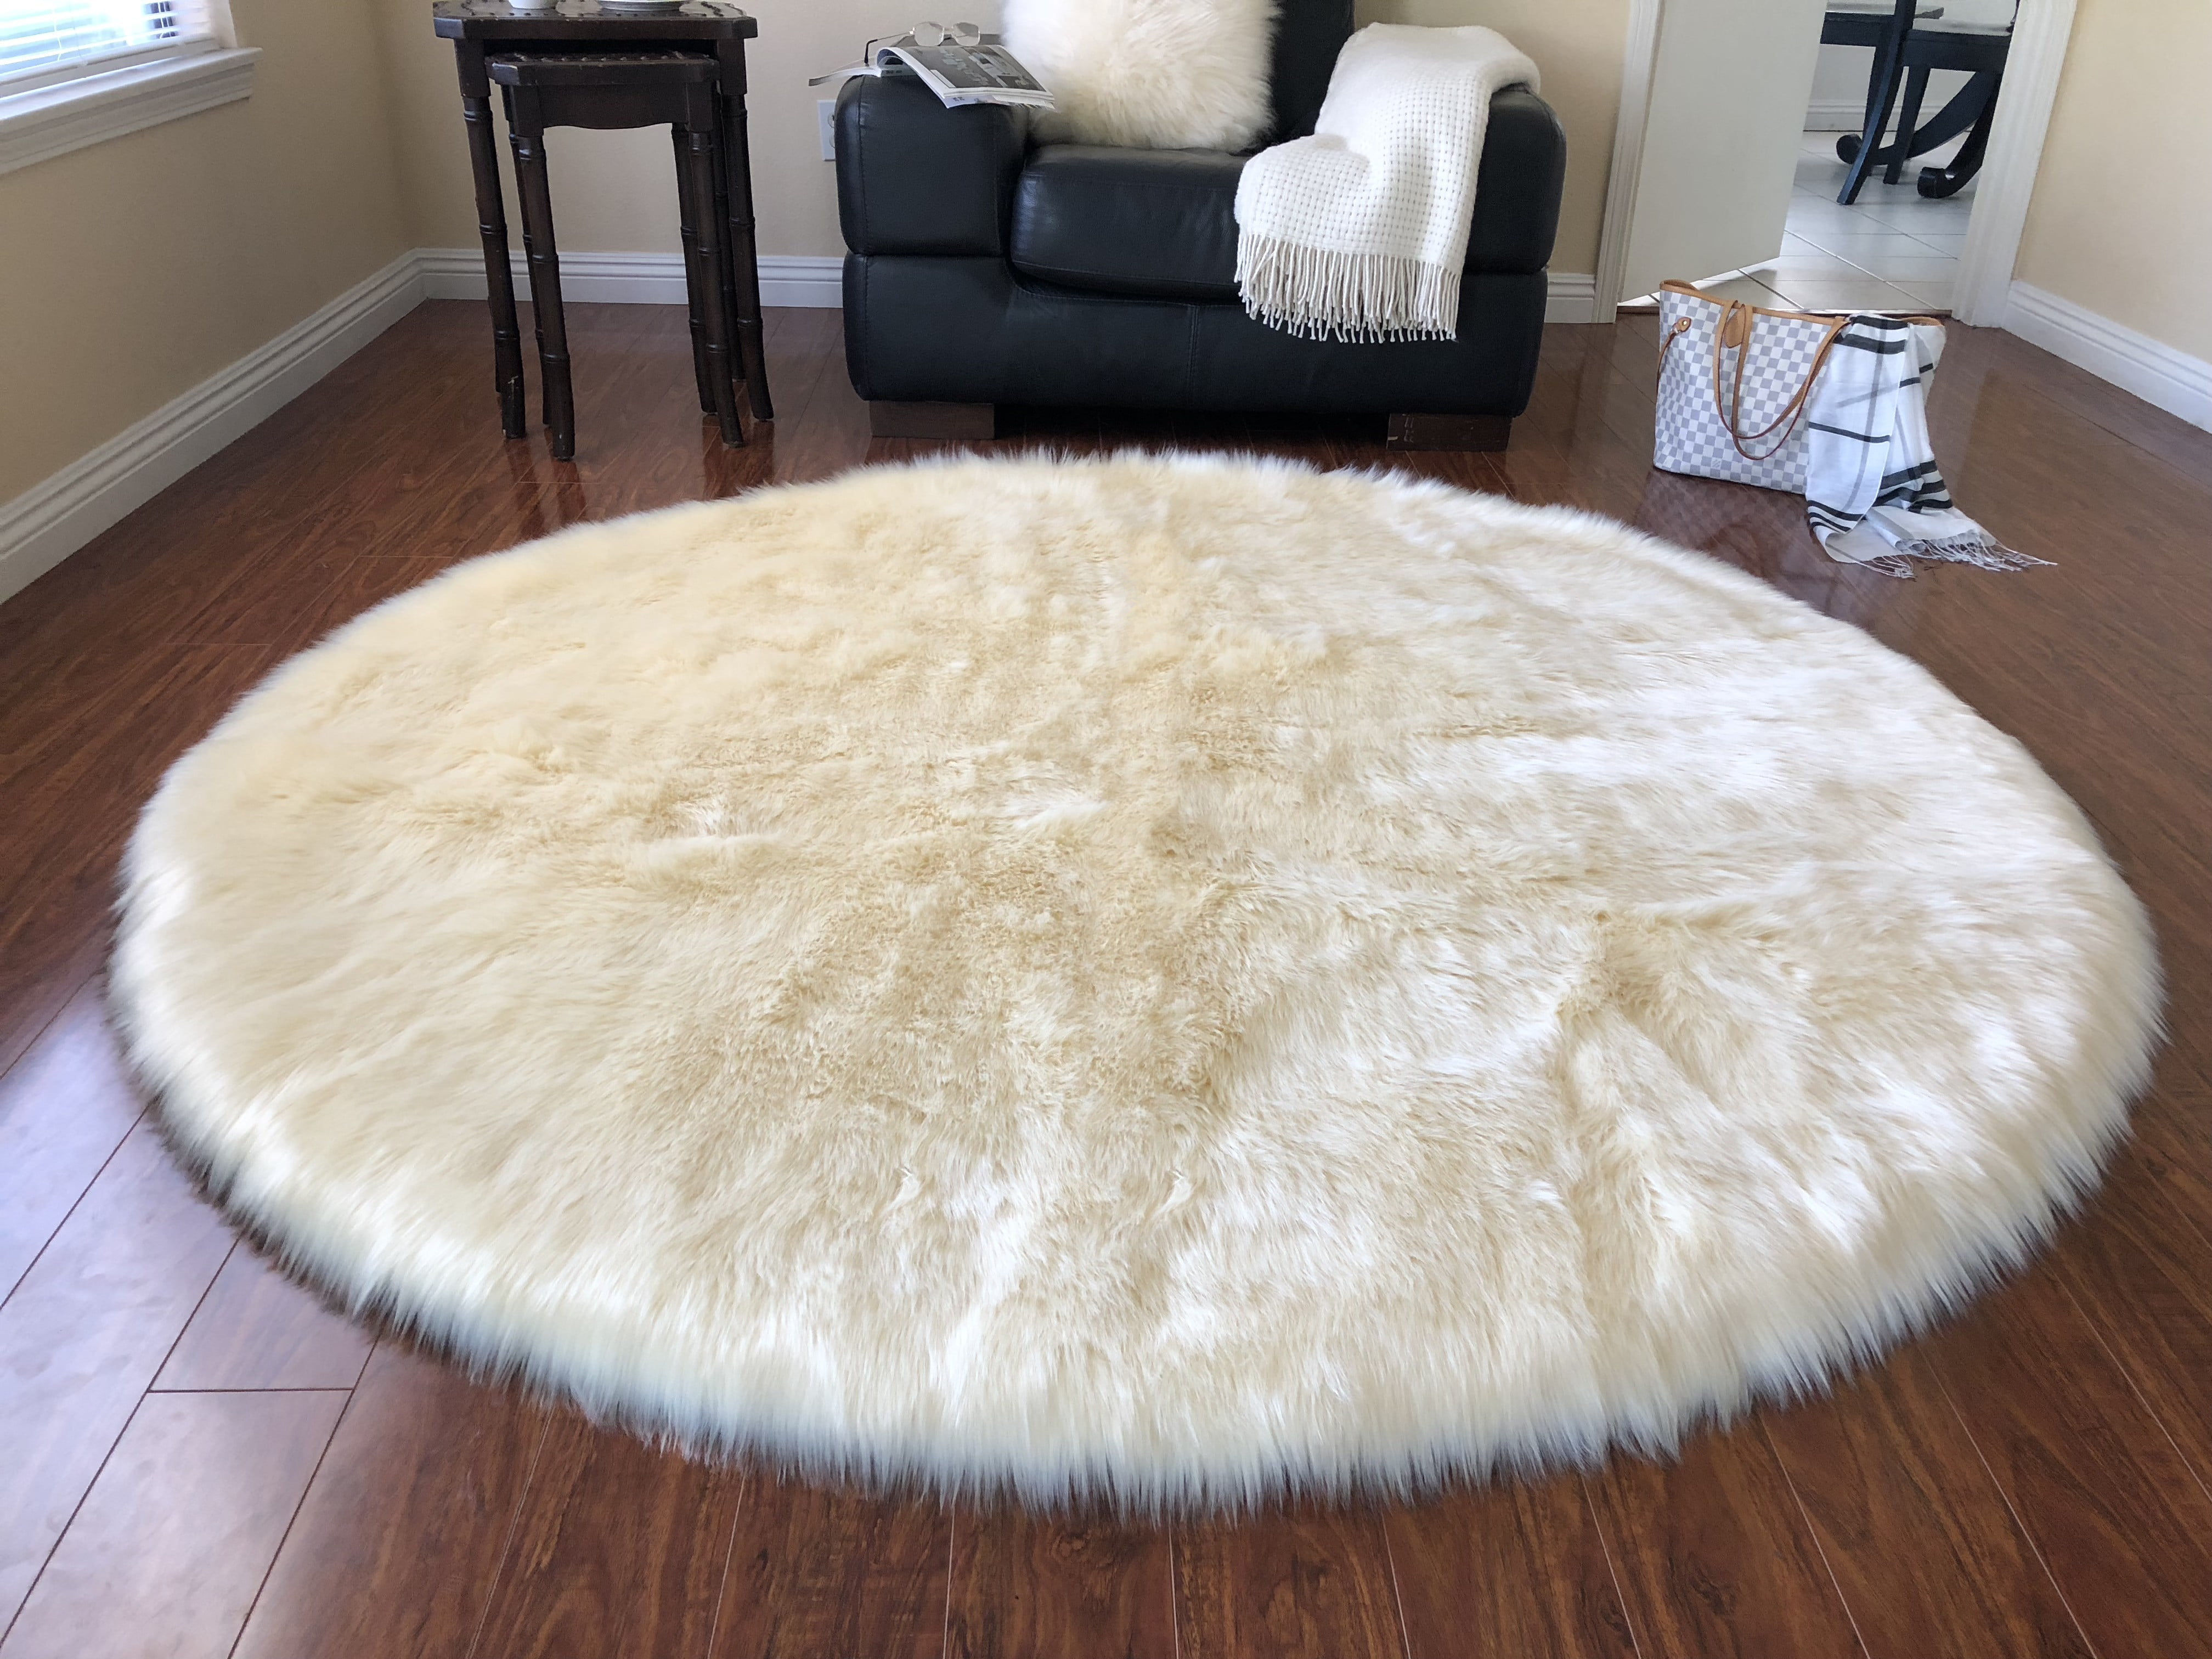 Round Sheepskin Rug In Living Room